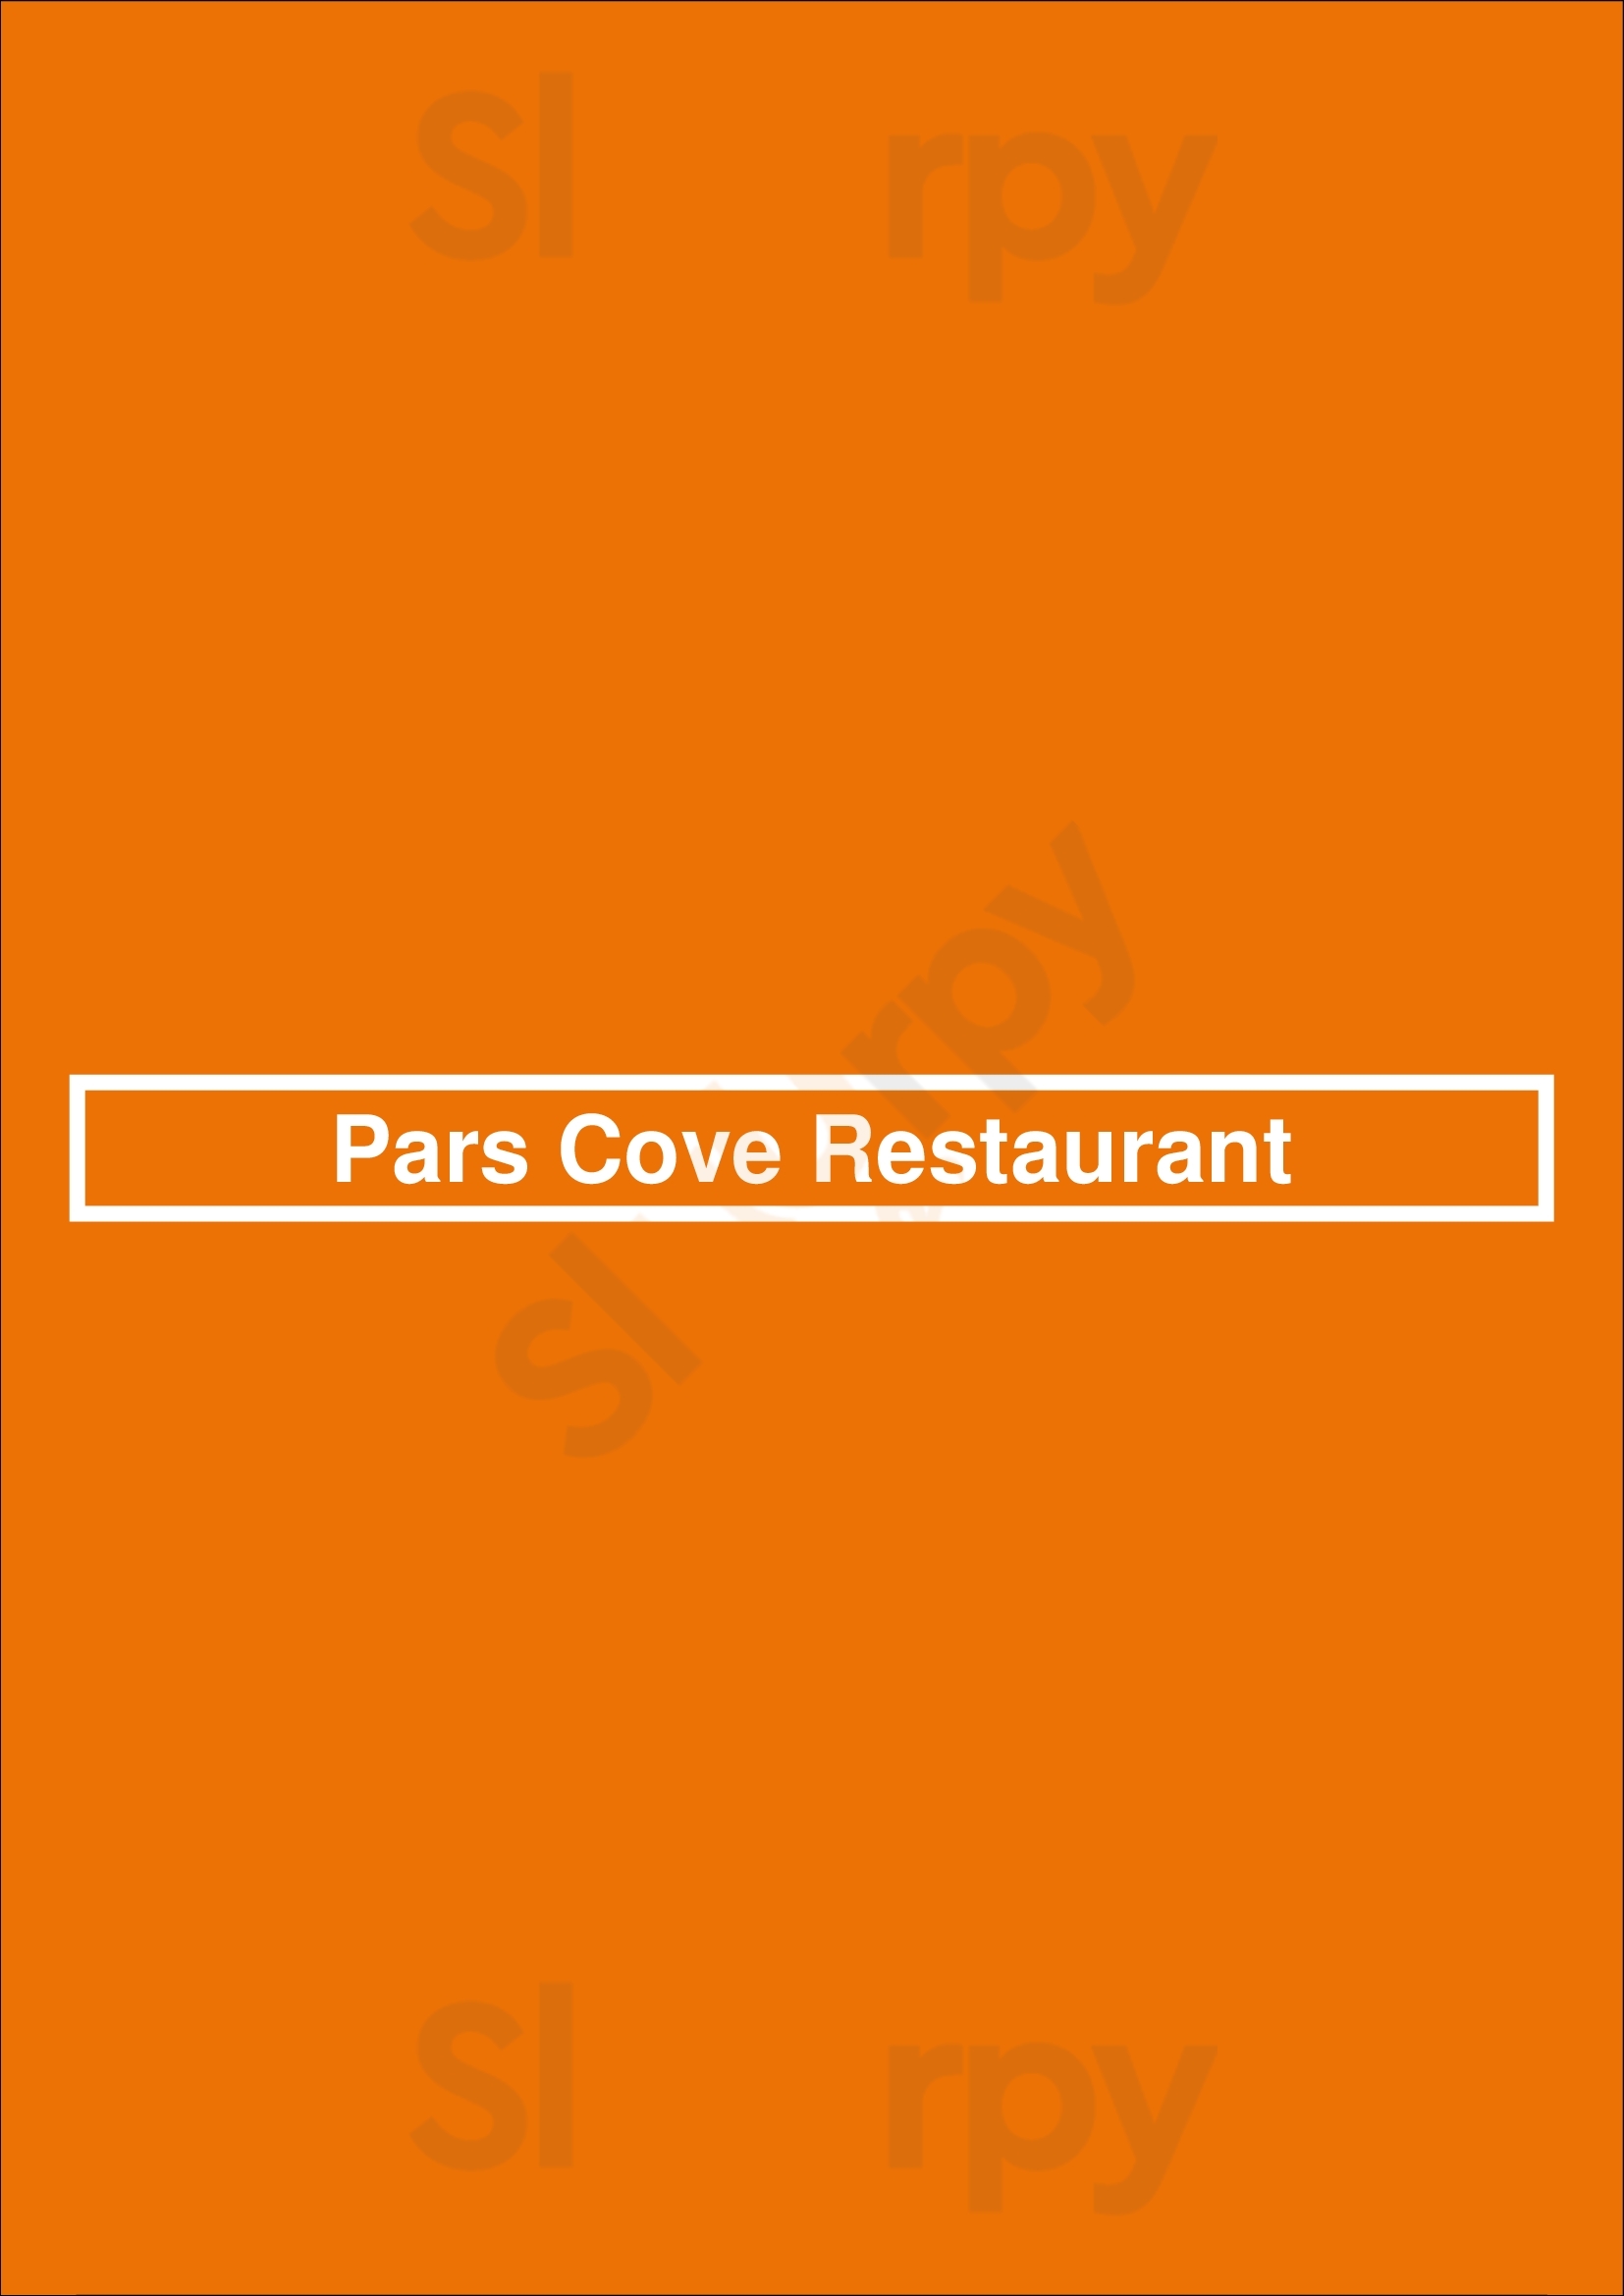 Pars Cove Restaurant Chicago Menu - 1